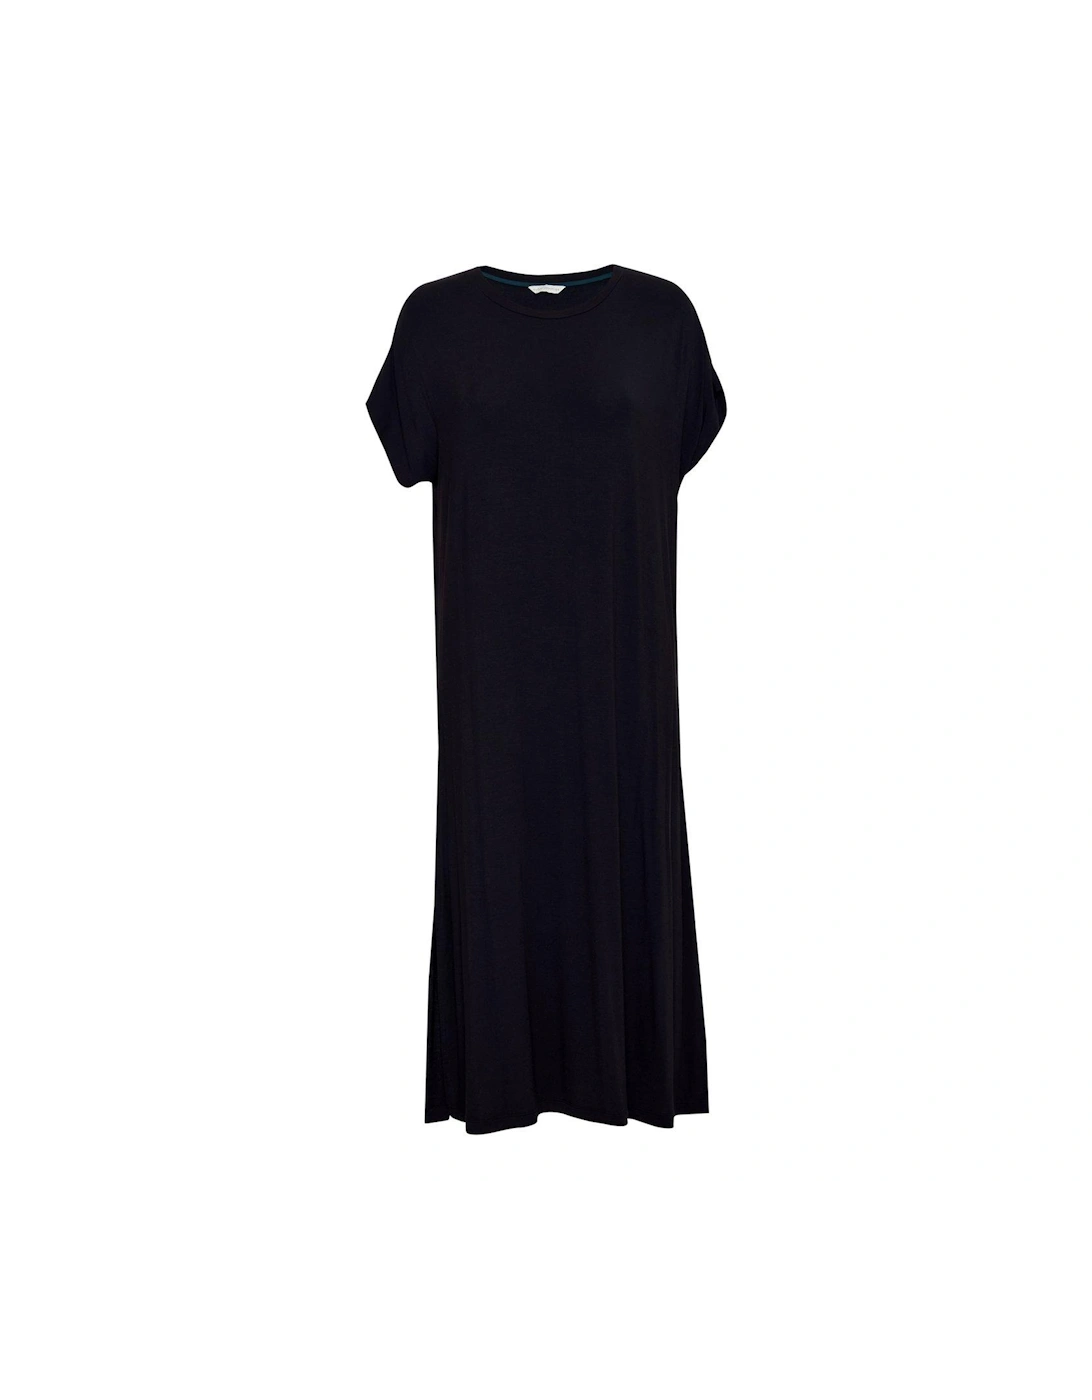 Black Jersey Cap Sleeve Nightdress